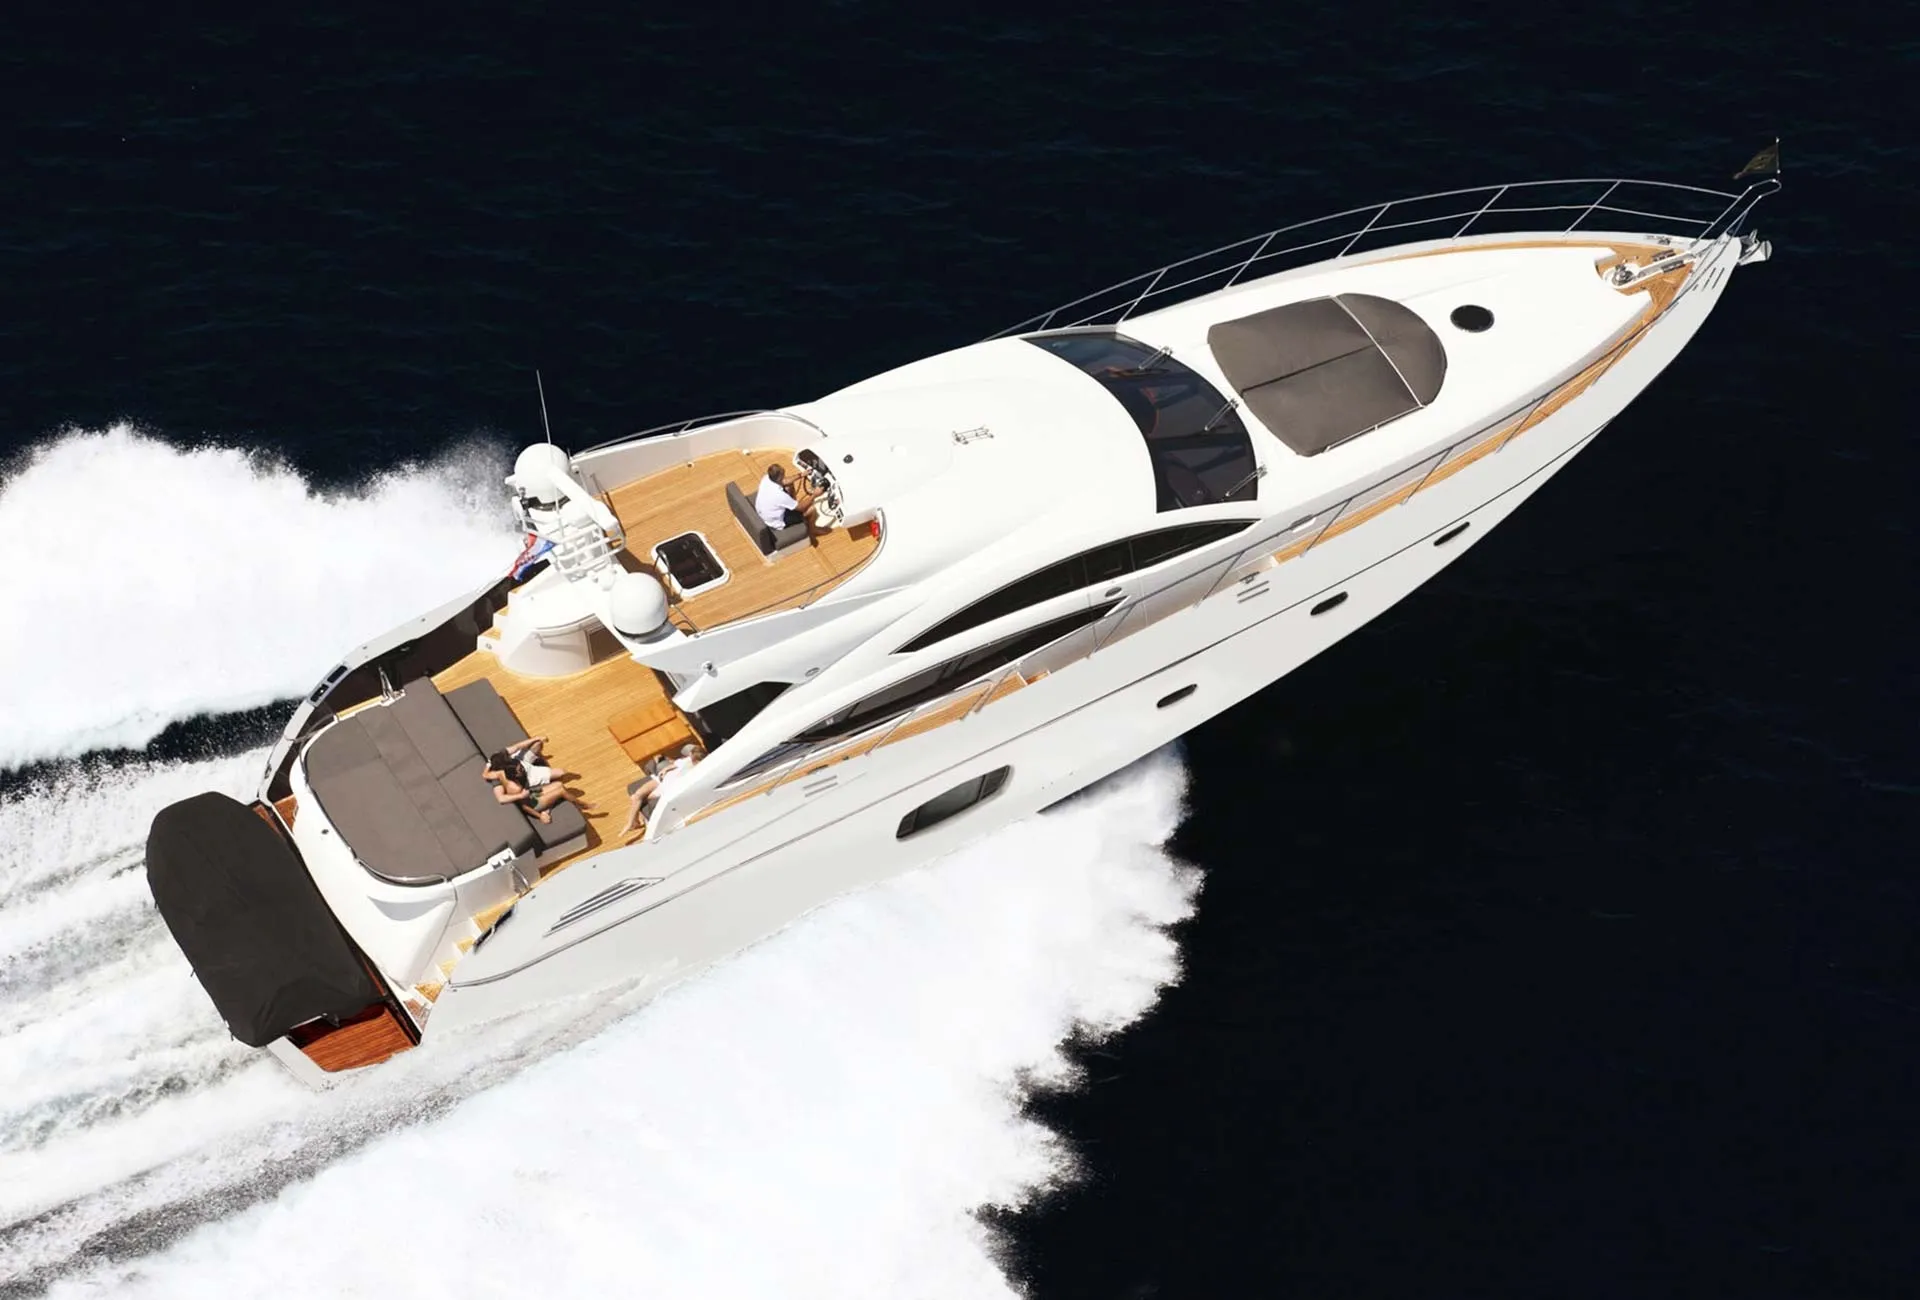 azimut s6 yacht for sale AMF design technology